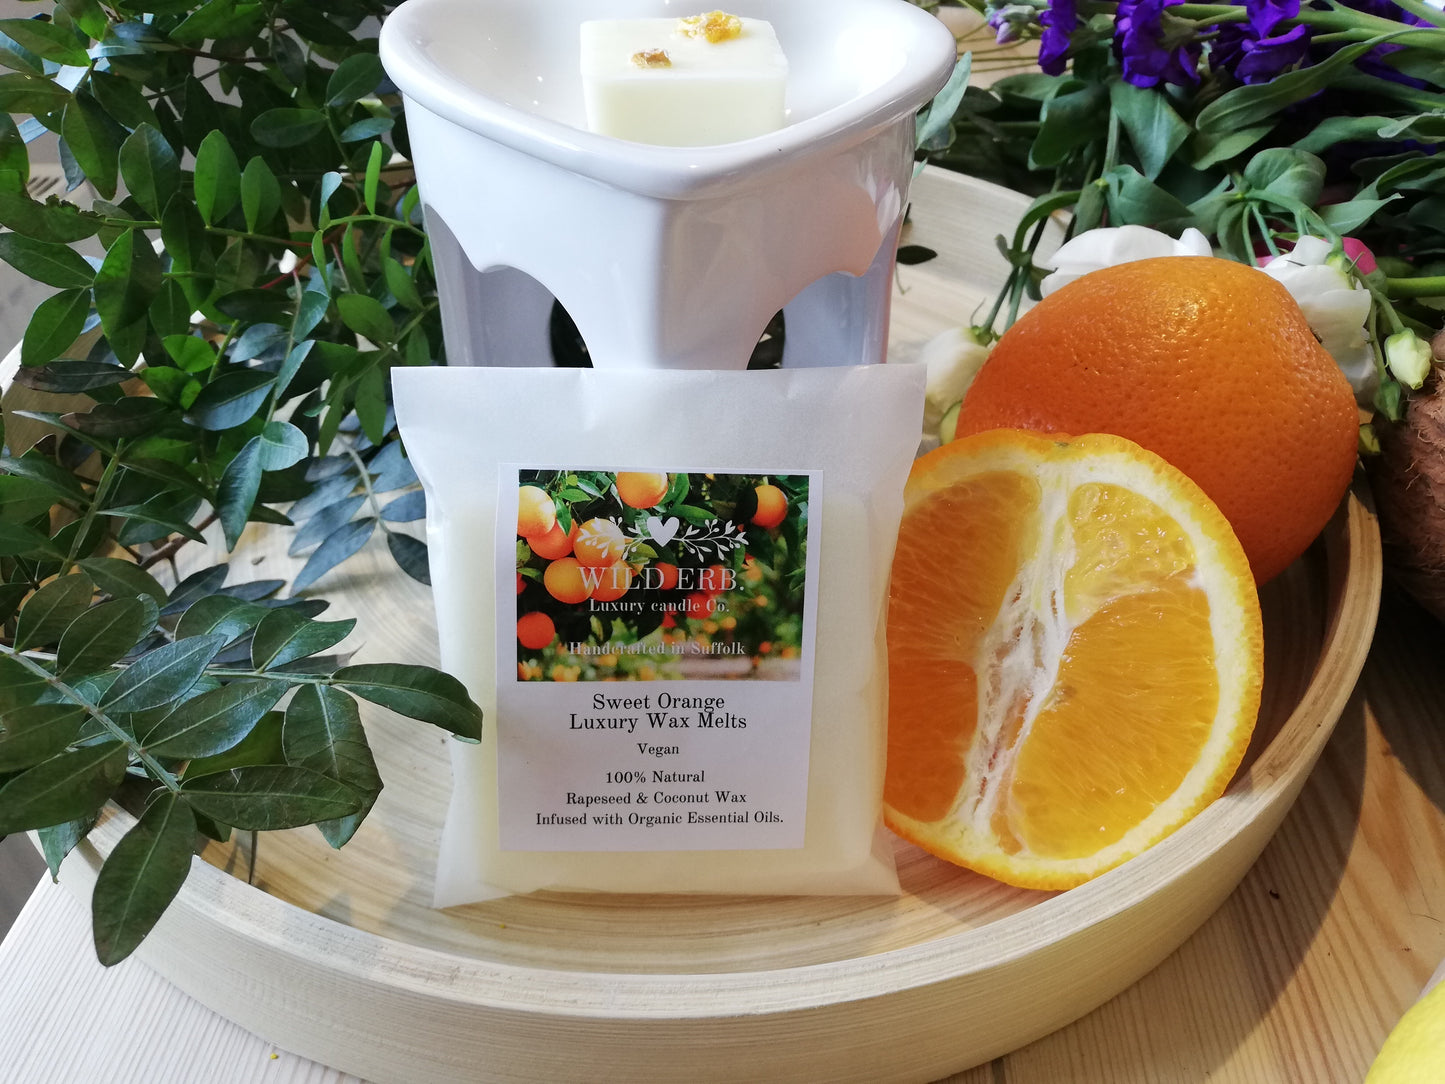 Sweet Orange Aromatherapy Luxury Wax Melts